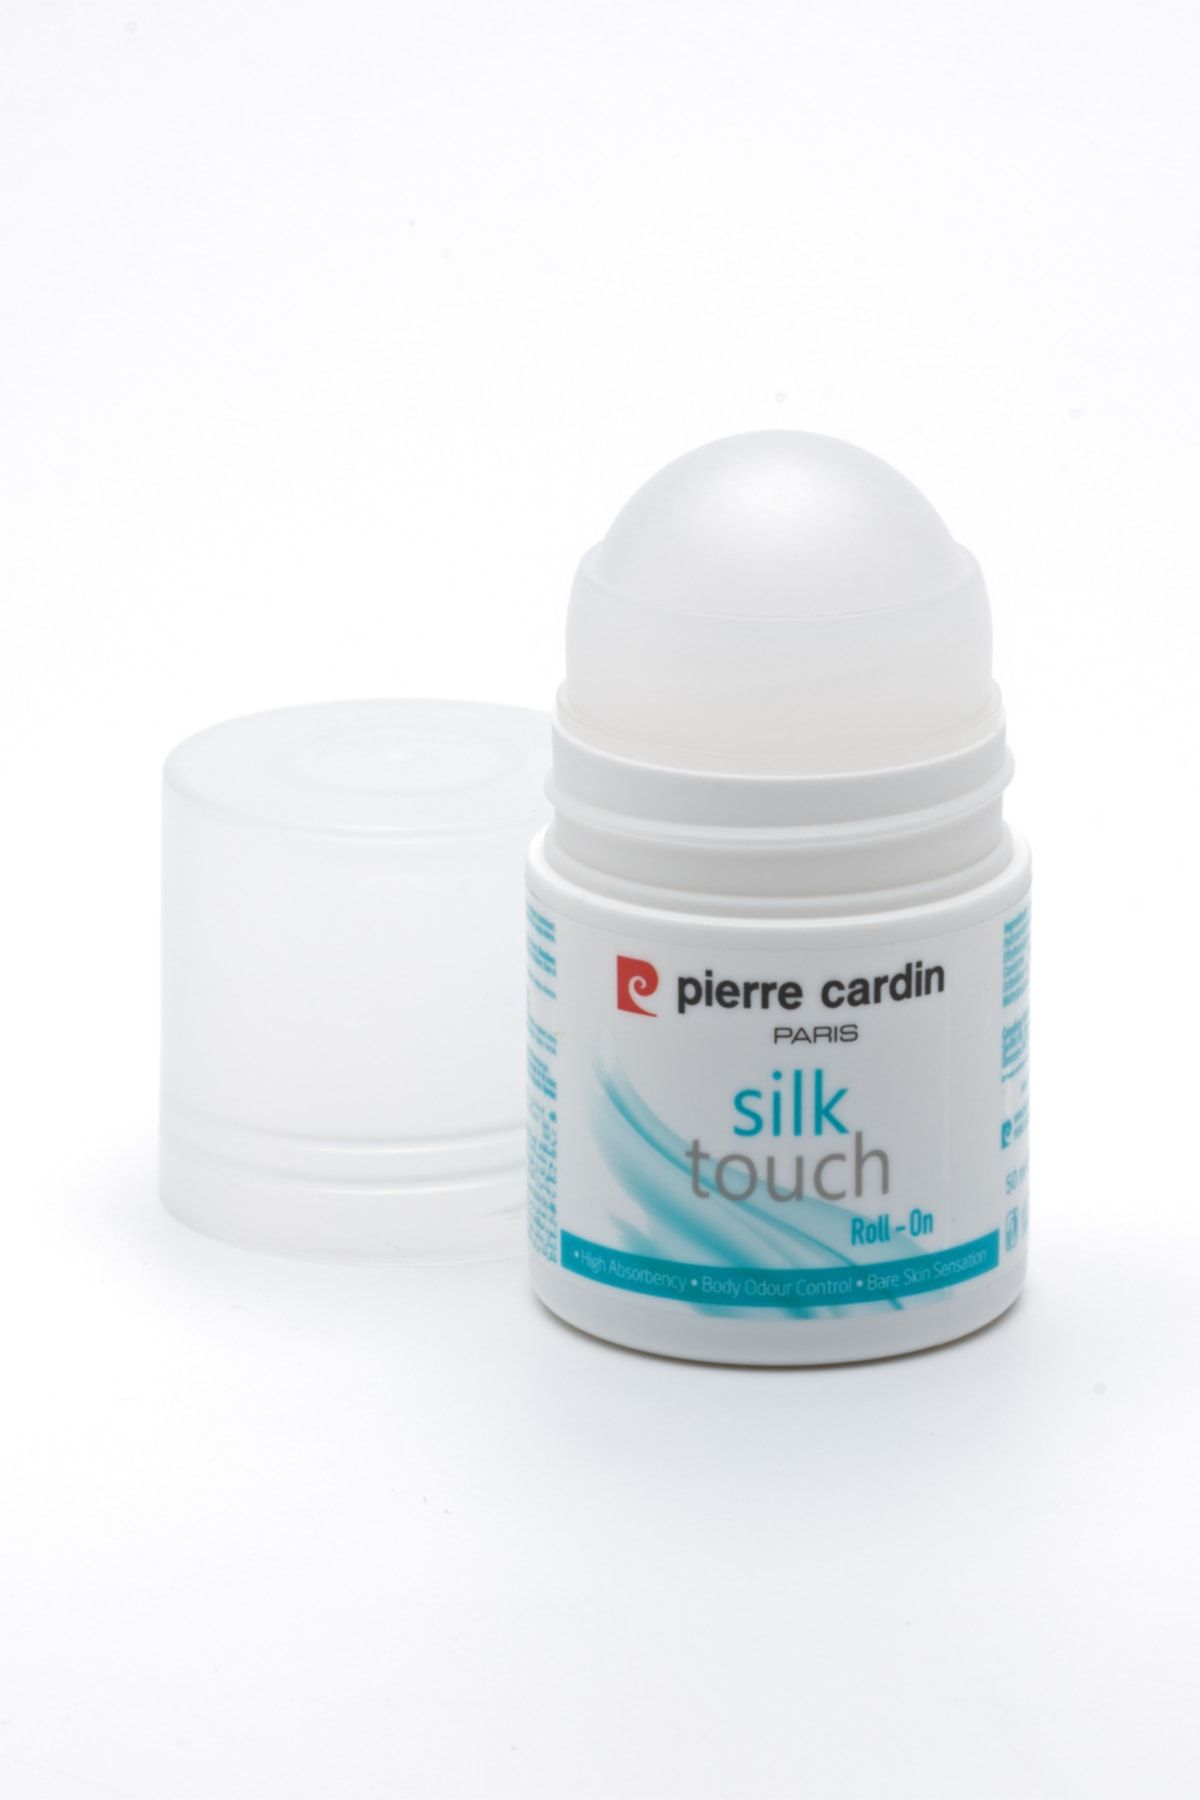 Pierre Cardin Kadın Silk Touch Roll On 50 ml 9800570505192